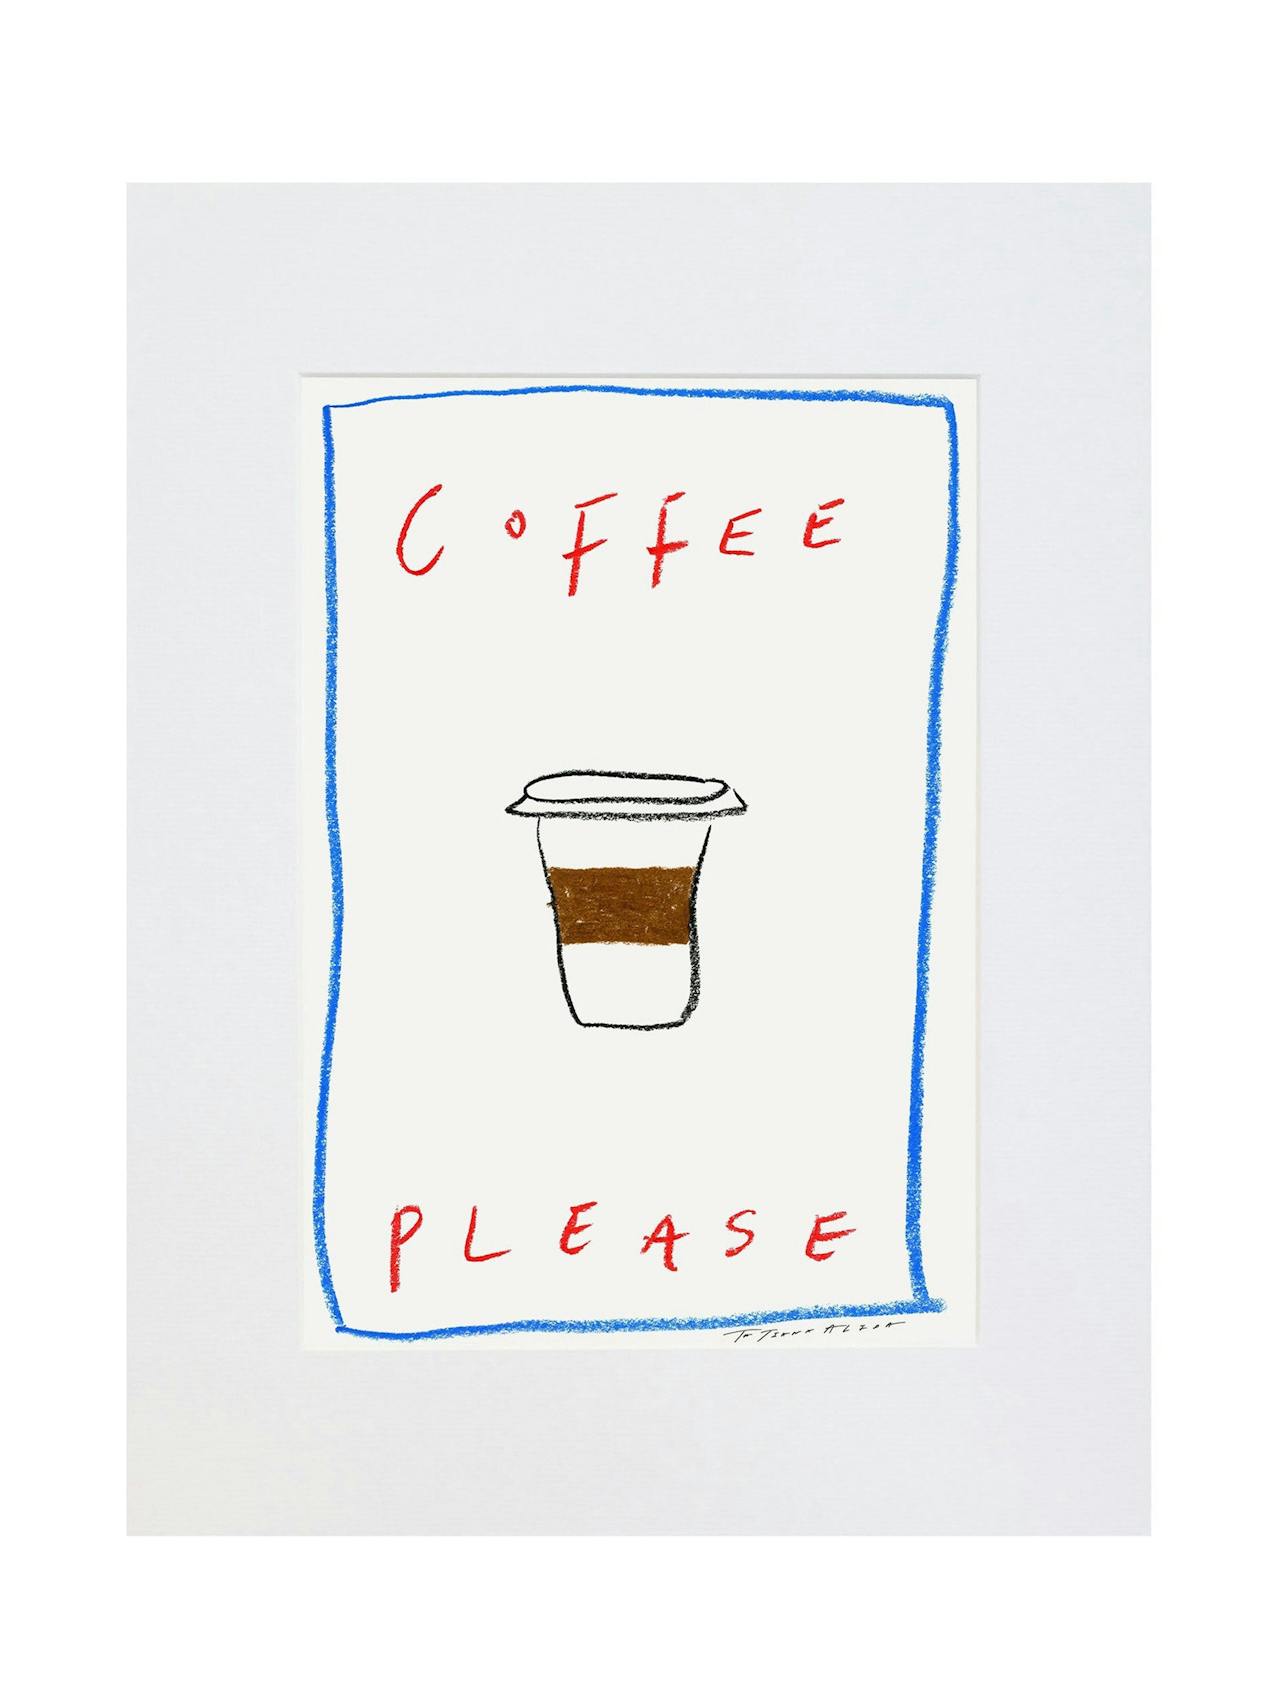 Coffee please print